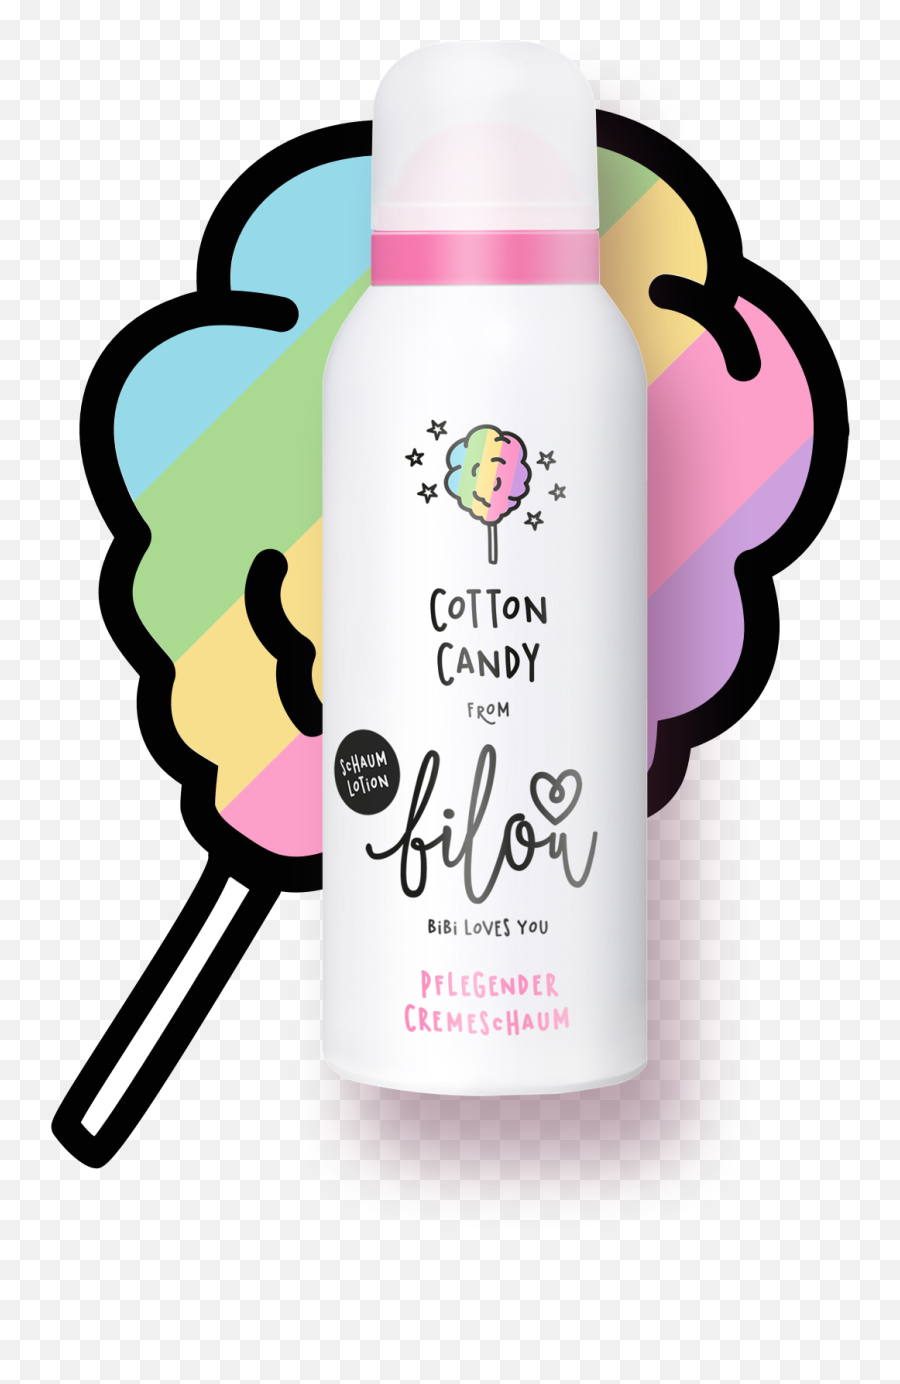 Bilou Cremeschaum Cotton Candy - Bilou Png,Cotton Candy Logo